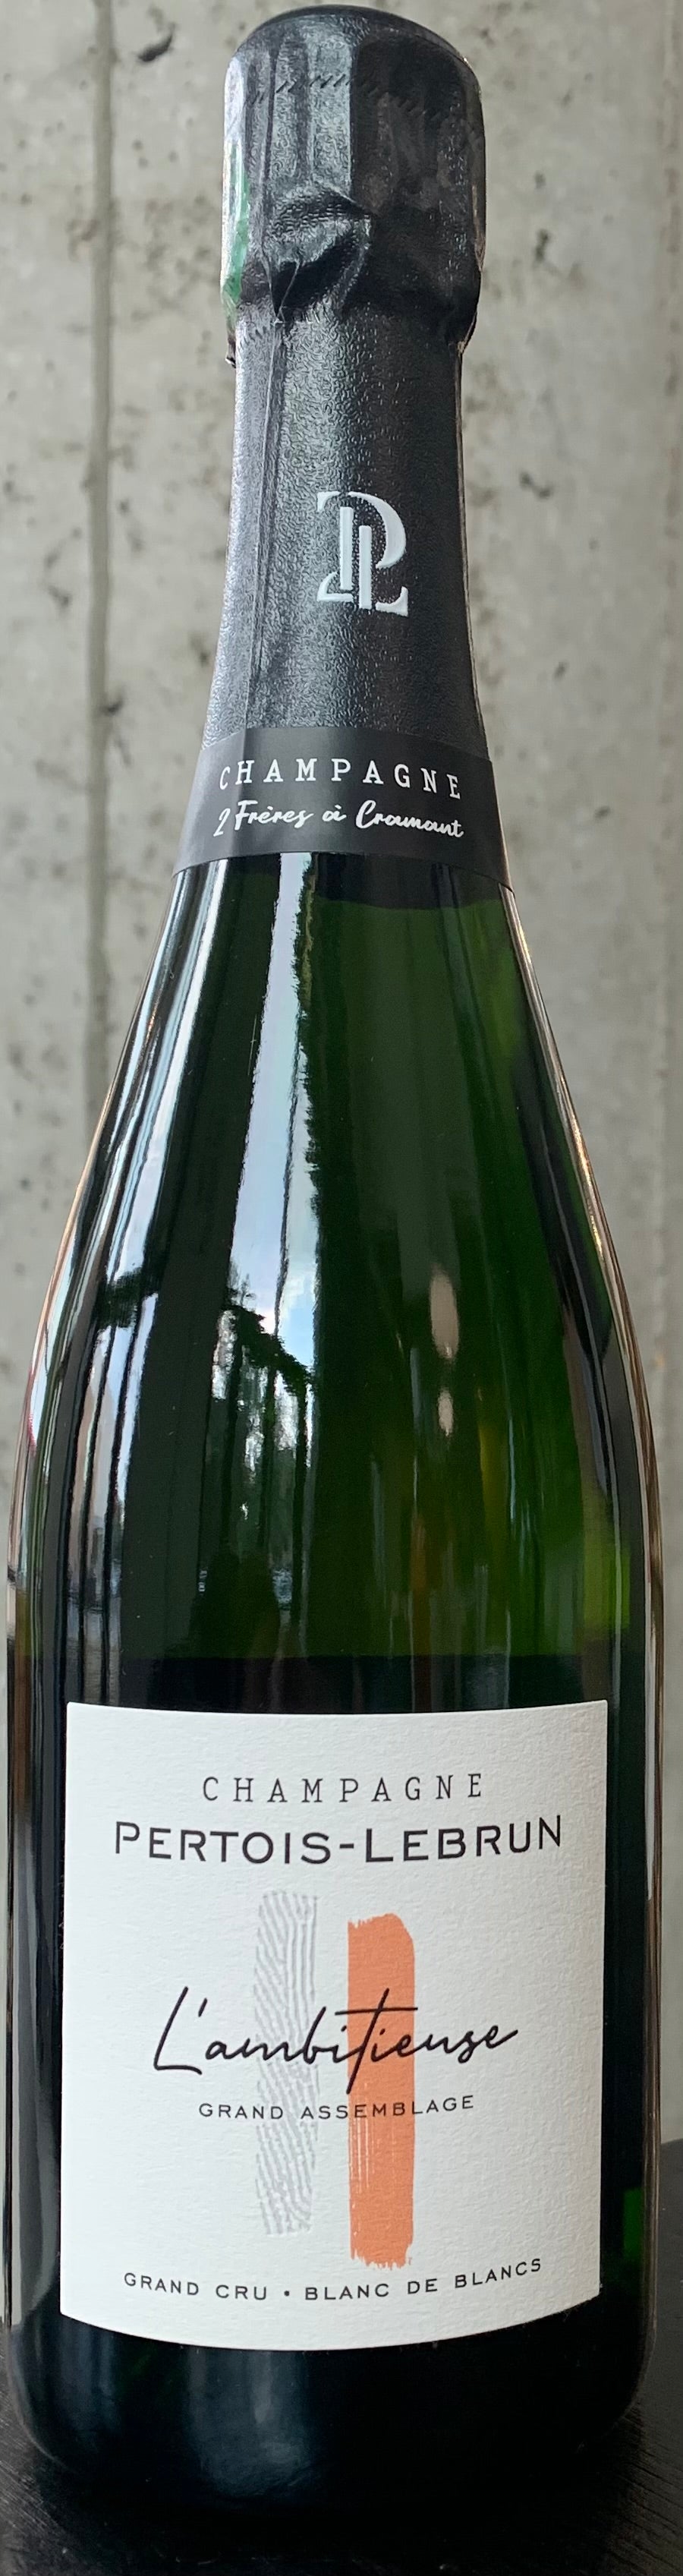 Pertois-Lebrun Champagne "L'ambitieuse" Blanc de Blancs NV (2016 base)